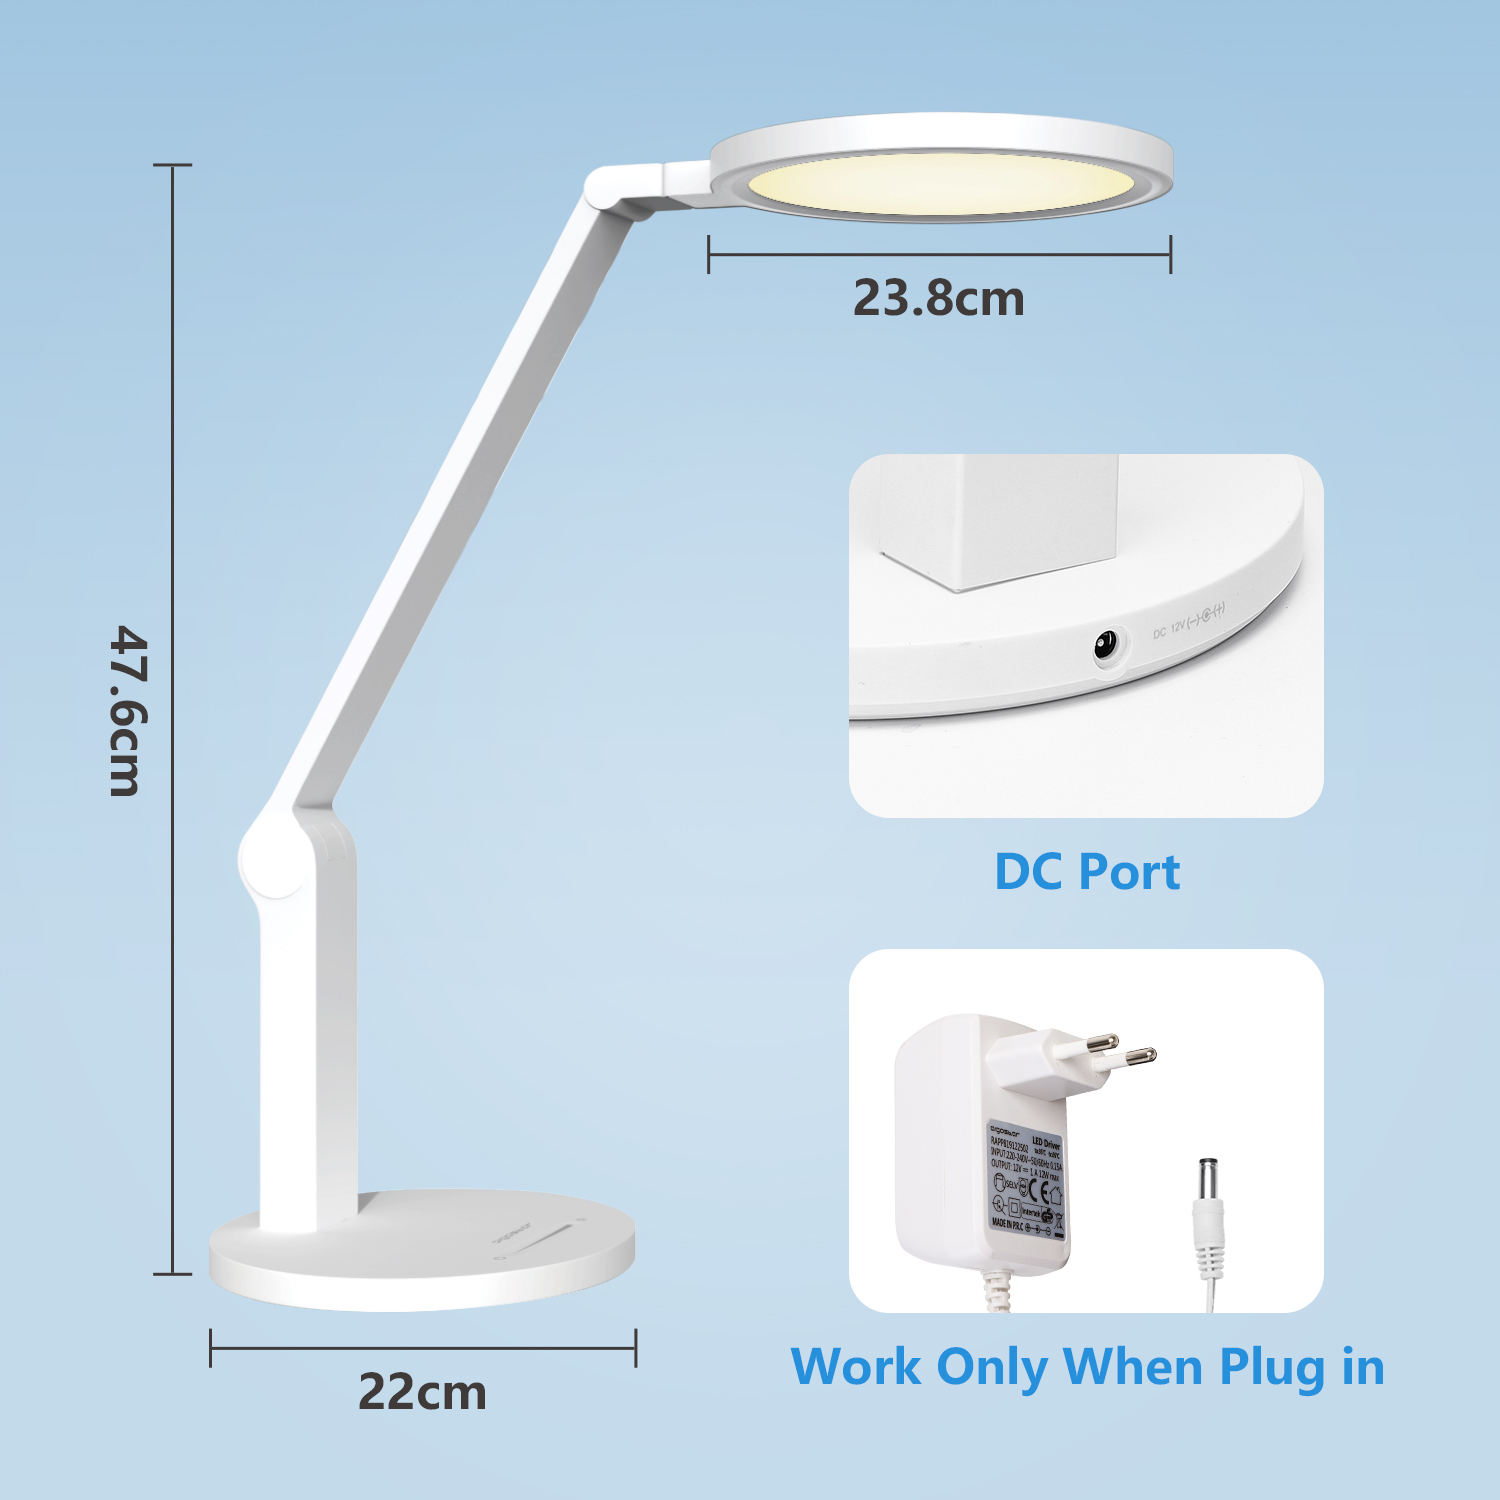 LED Bureaulamp - Veilig licht - 4000K - 15W - Geen RG0 blauw licht, professionele leeslamp